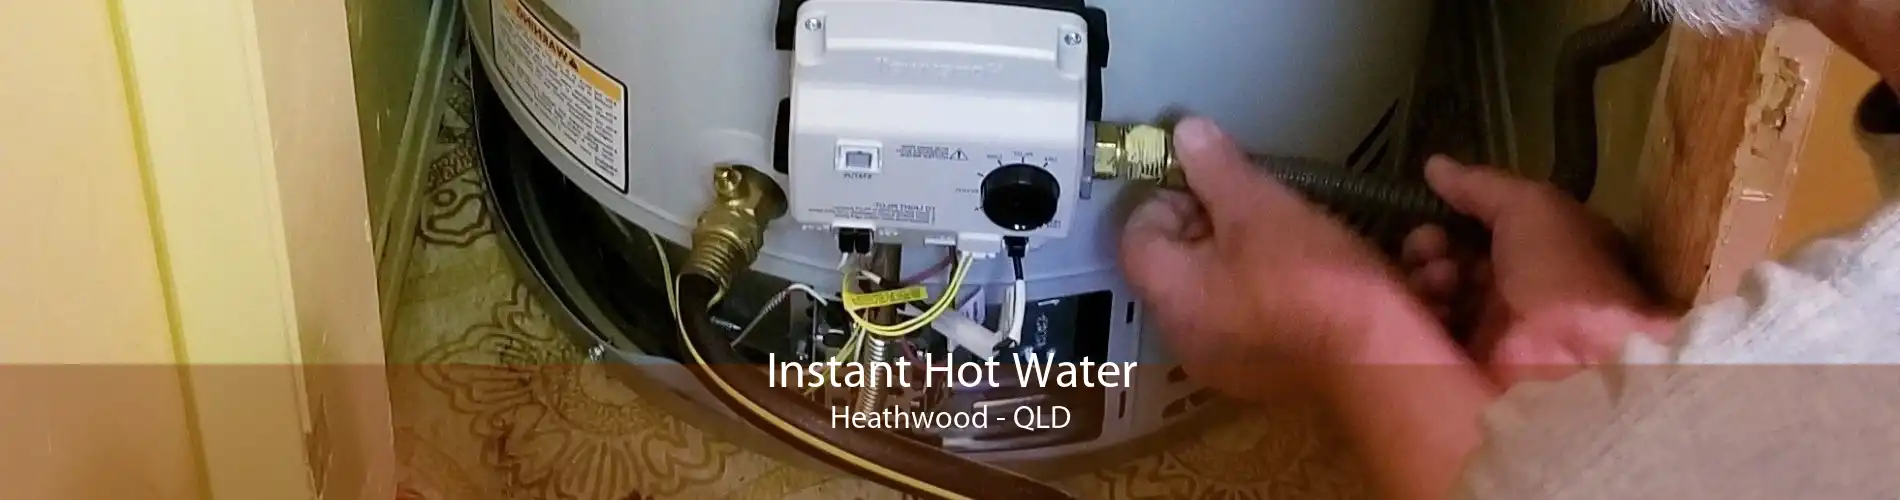 Instant Hot Water Heathwood - QLD